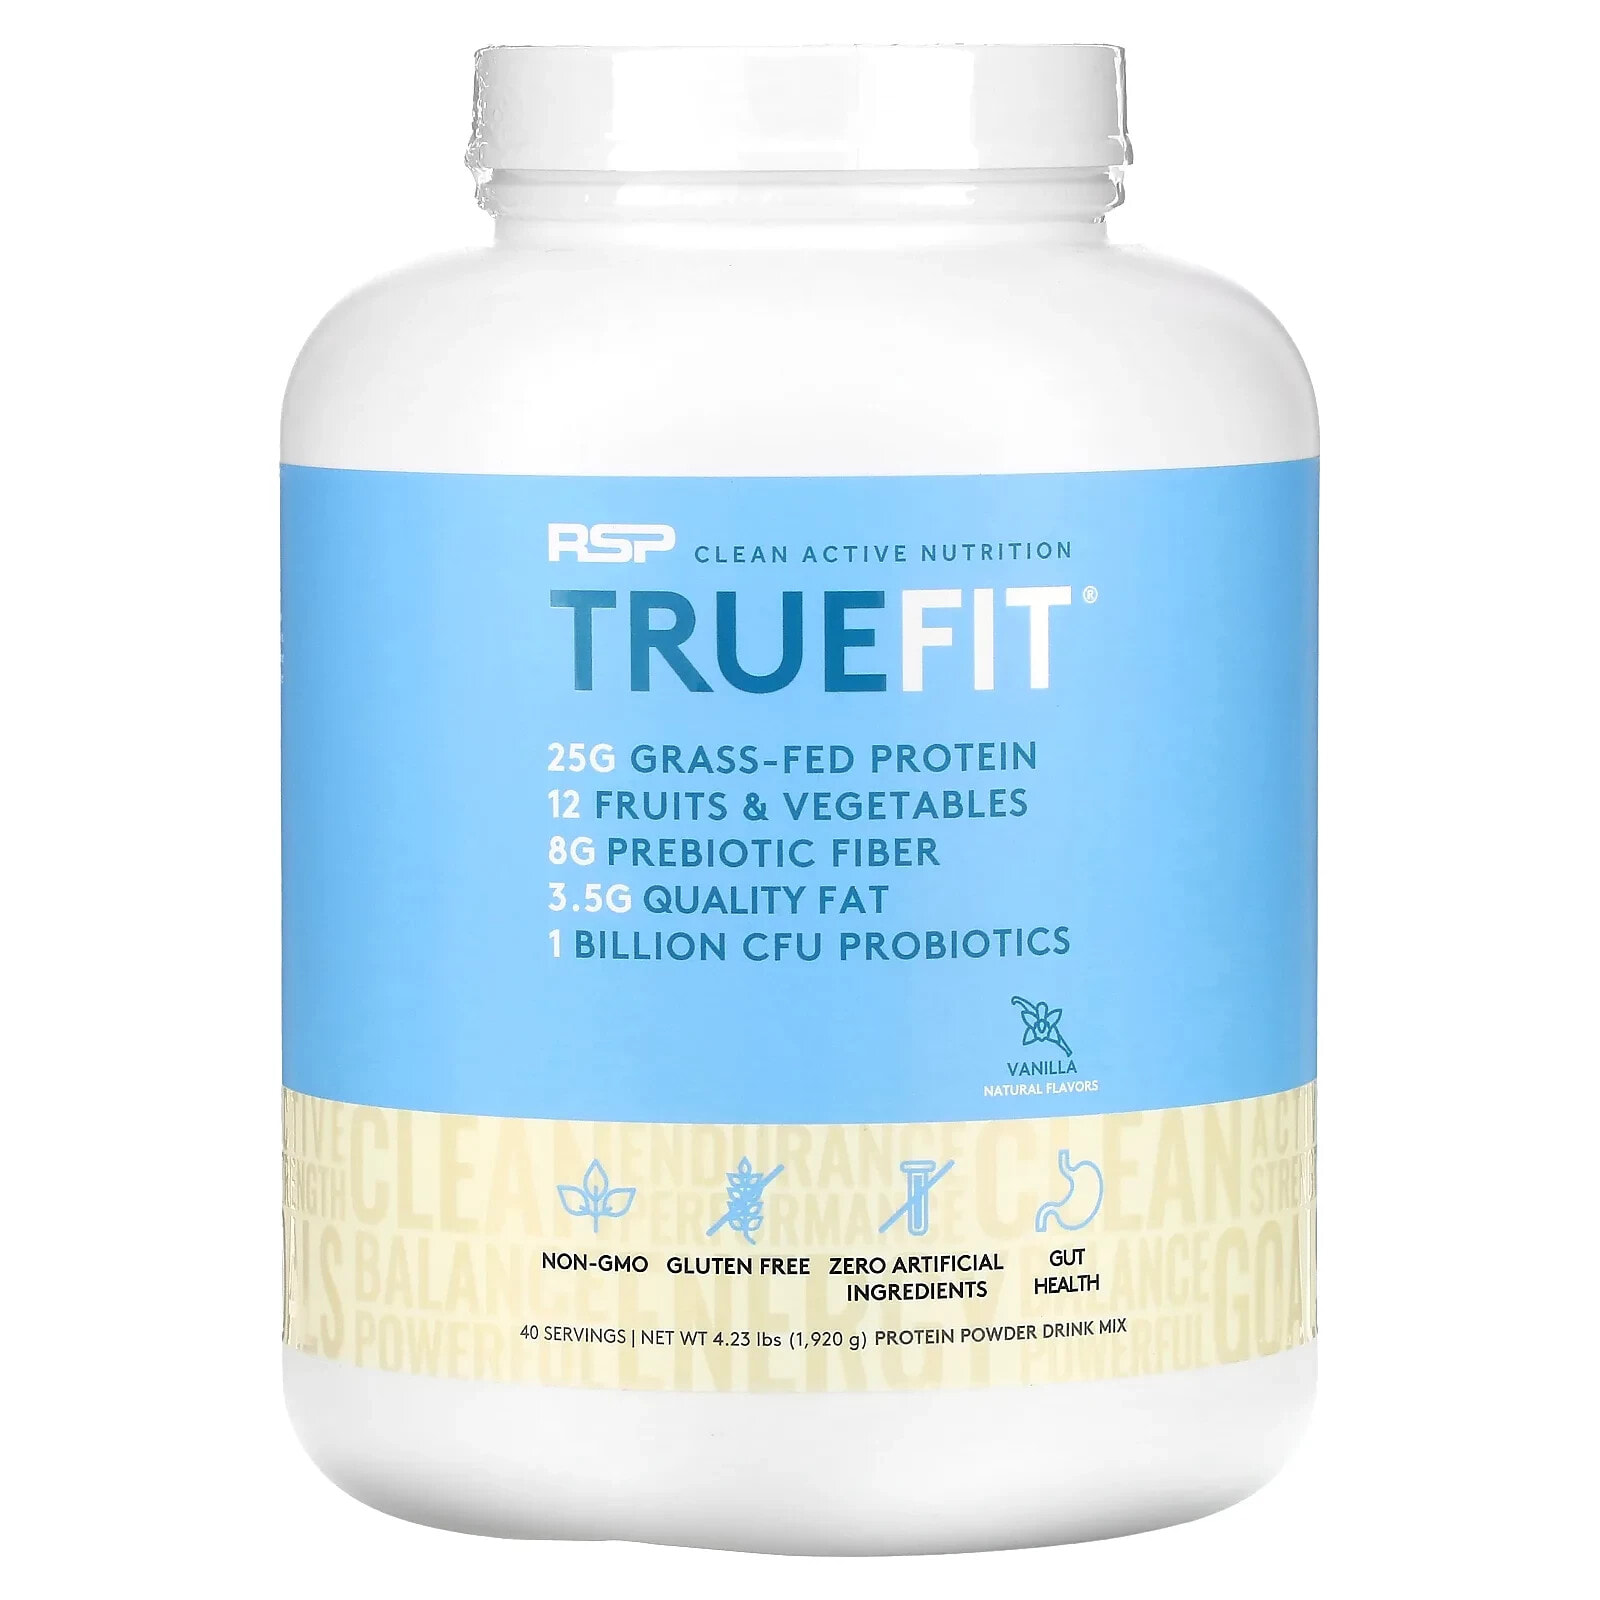 TrueFit, Grass-Fed Protein Powder Drink Mix with Fruits & Veggies, Vanilla, 4.23 lbs (1,920 g)